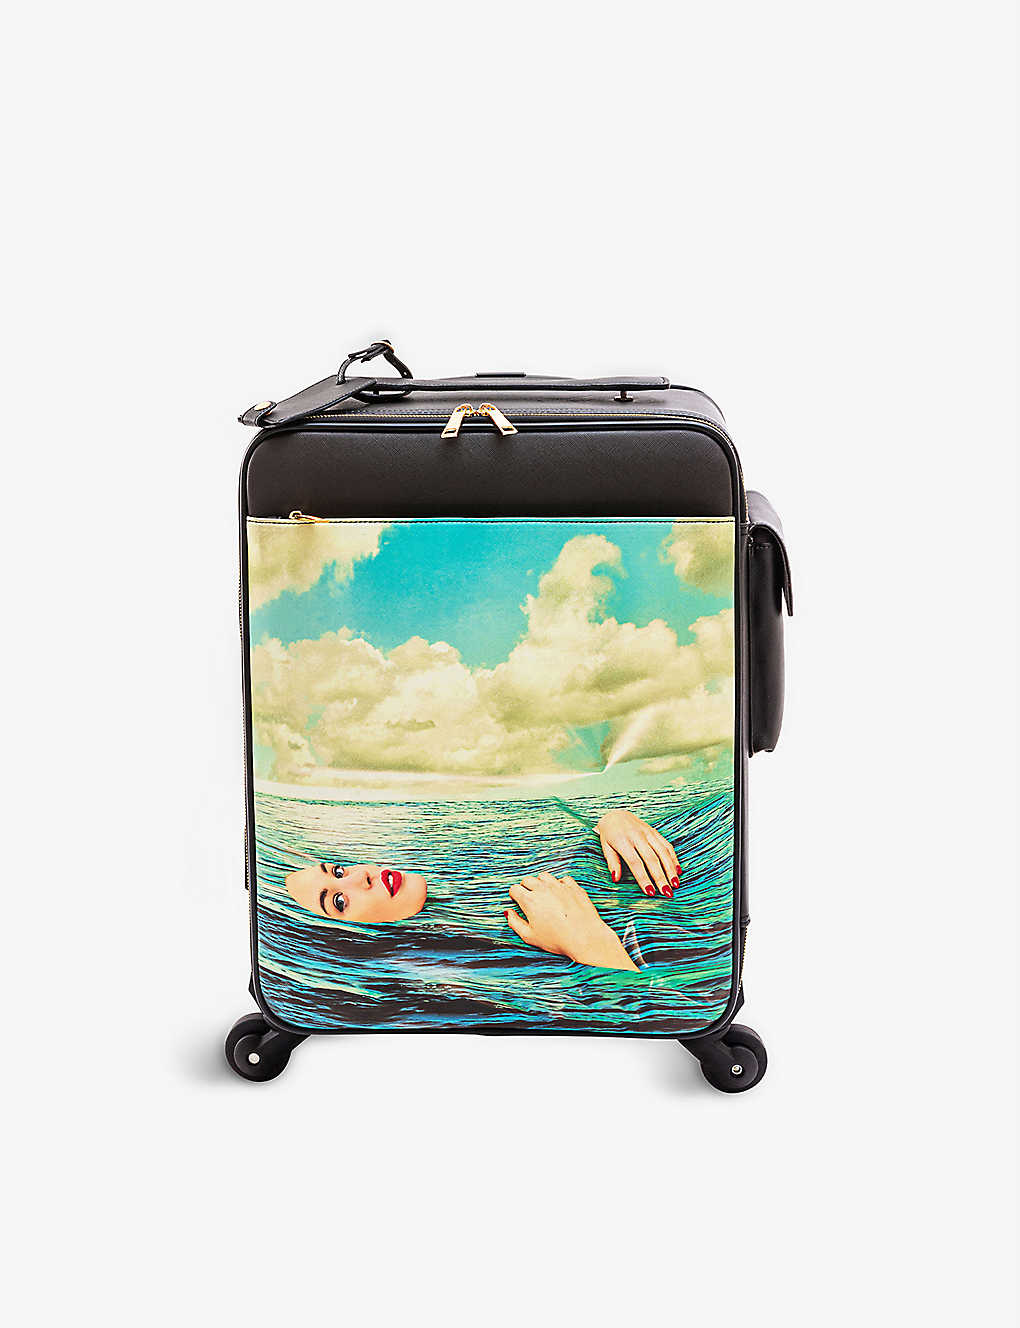 Seletti Wears Toiletpaper Seagirl Faux-leather Suitcase